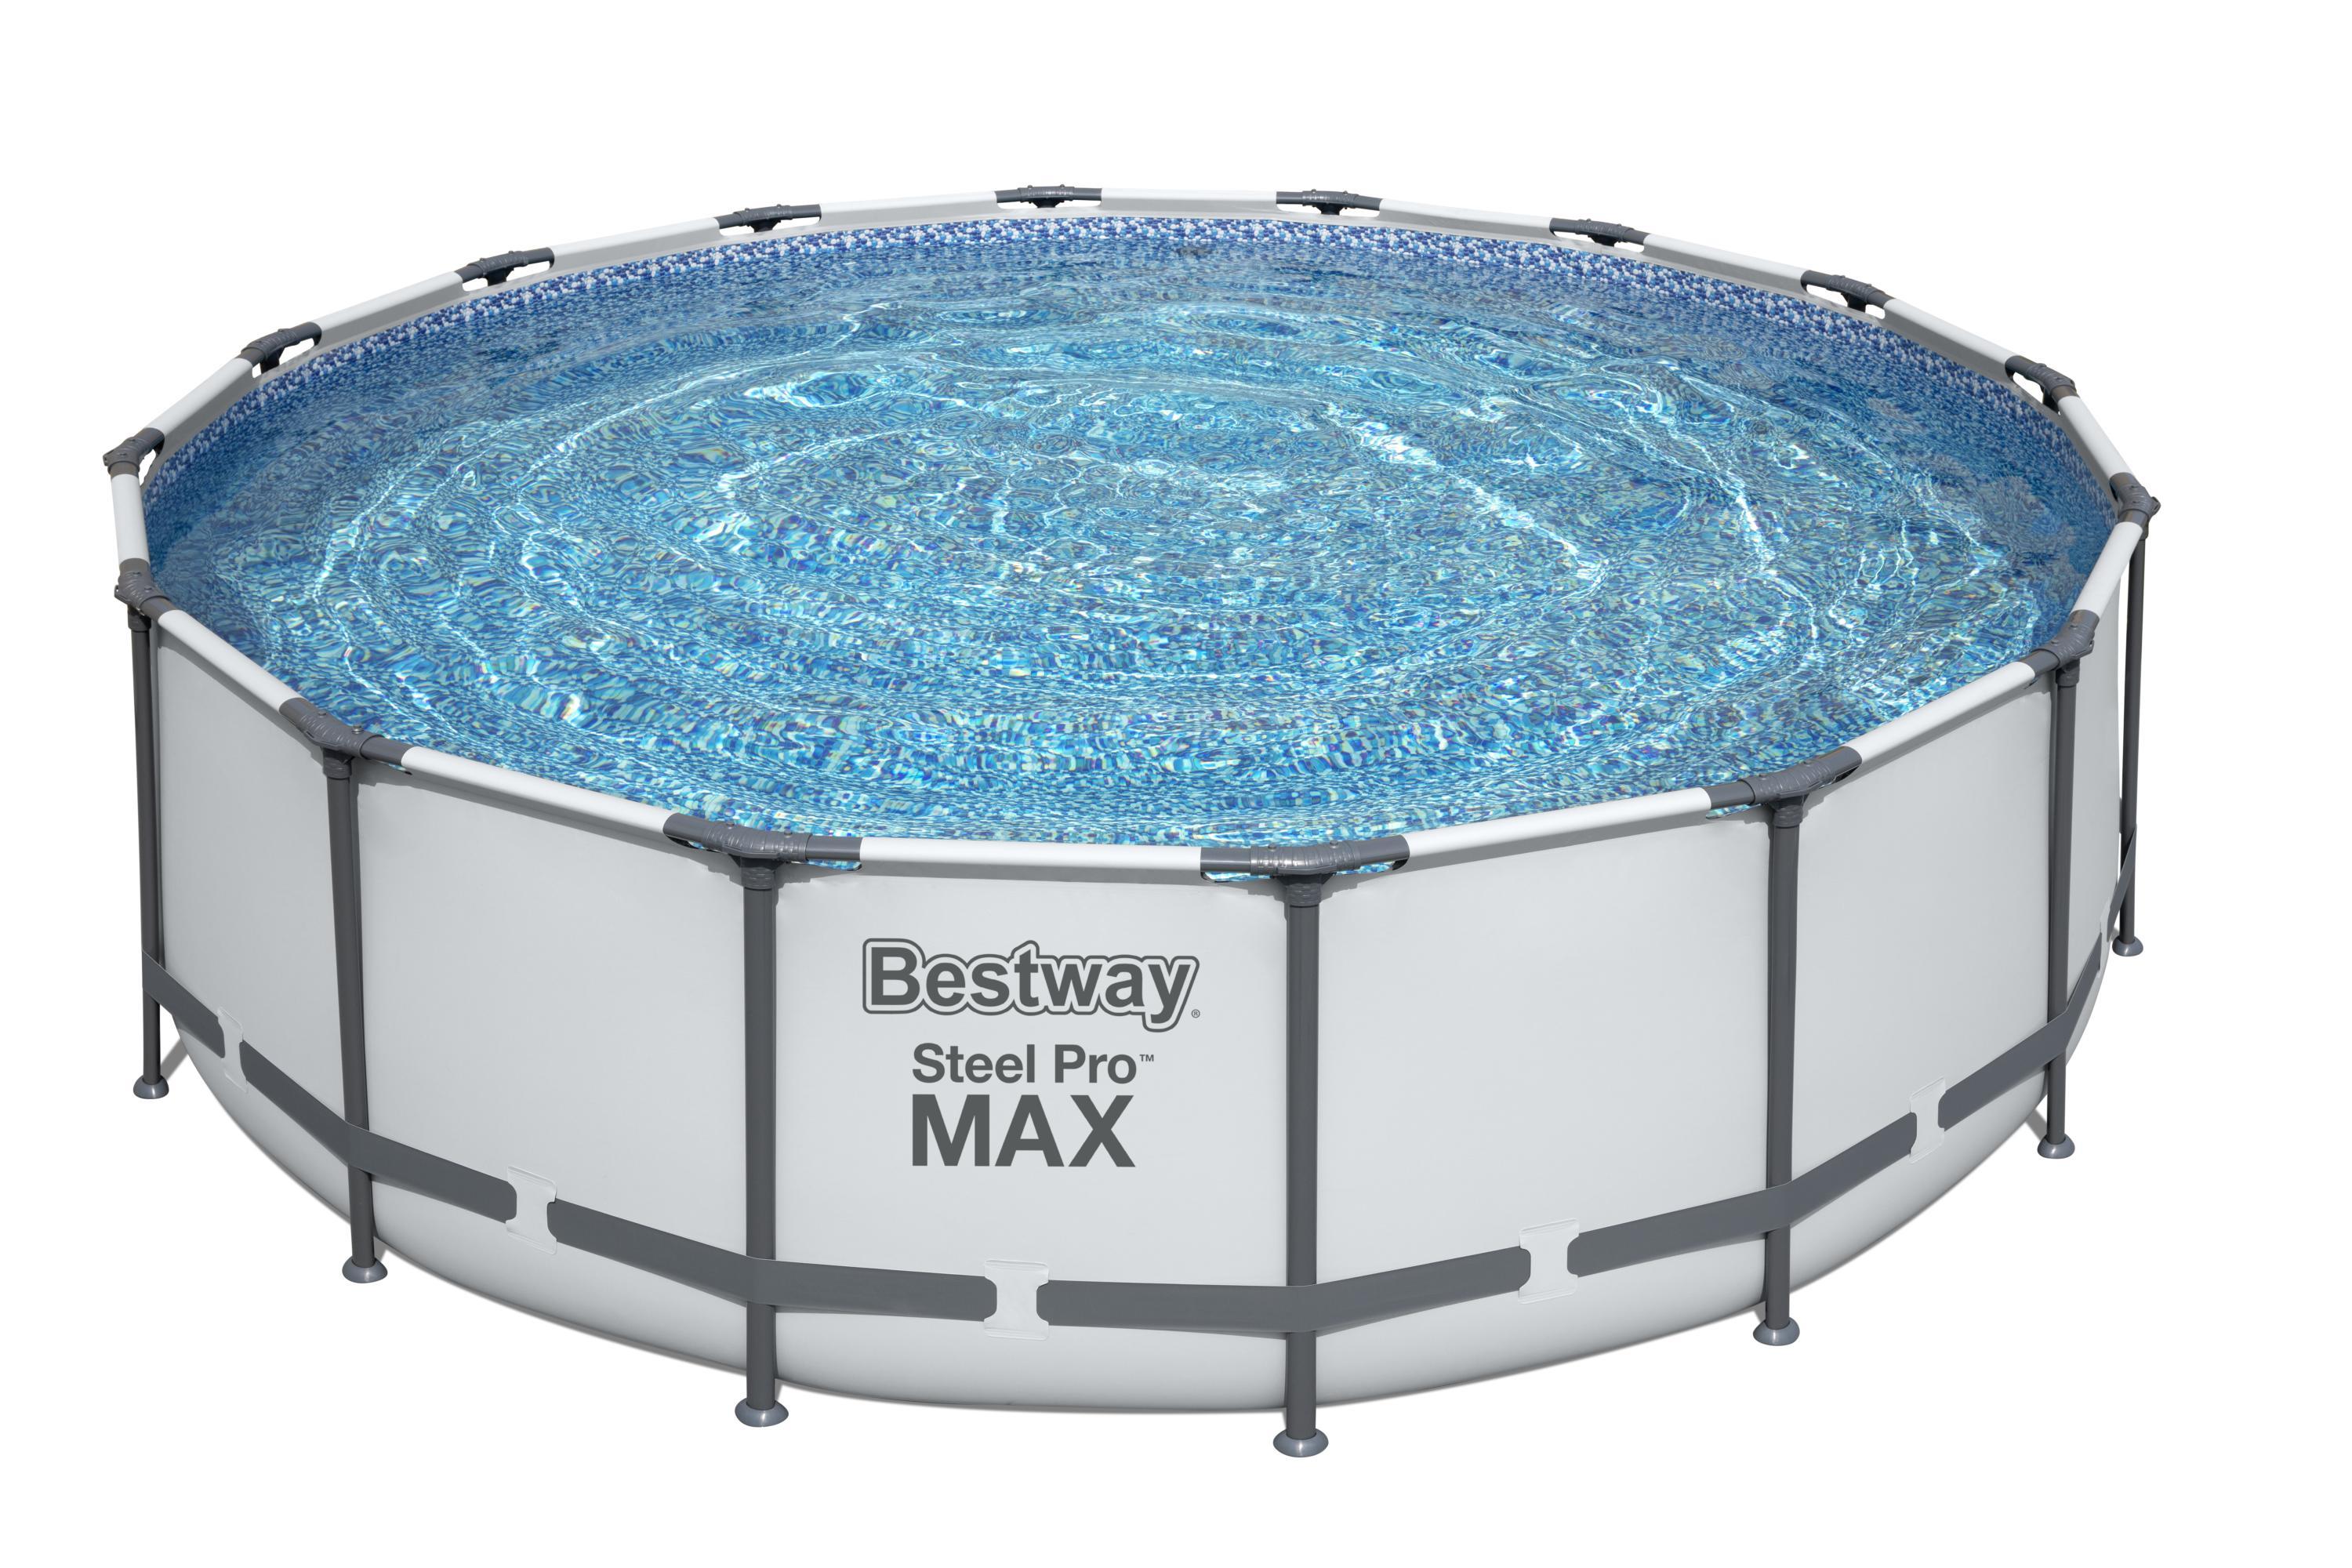 Bestway Steel Pro MAX